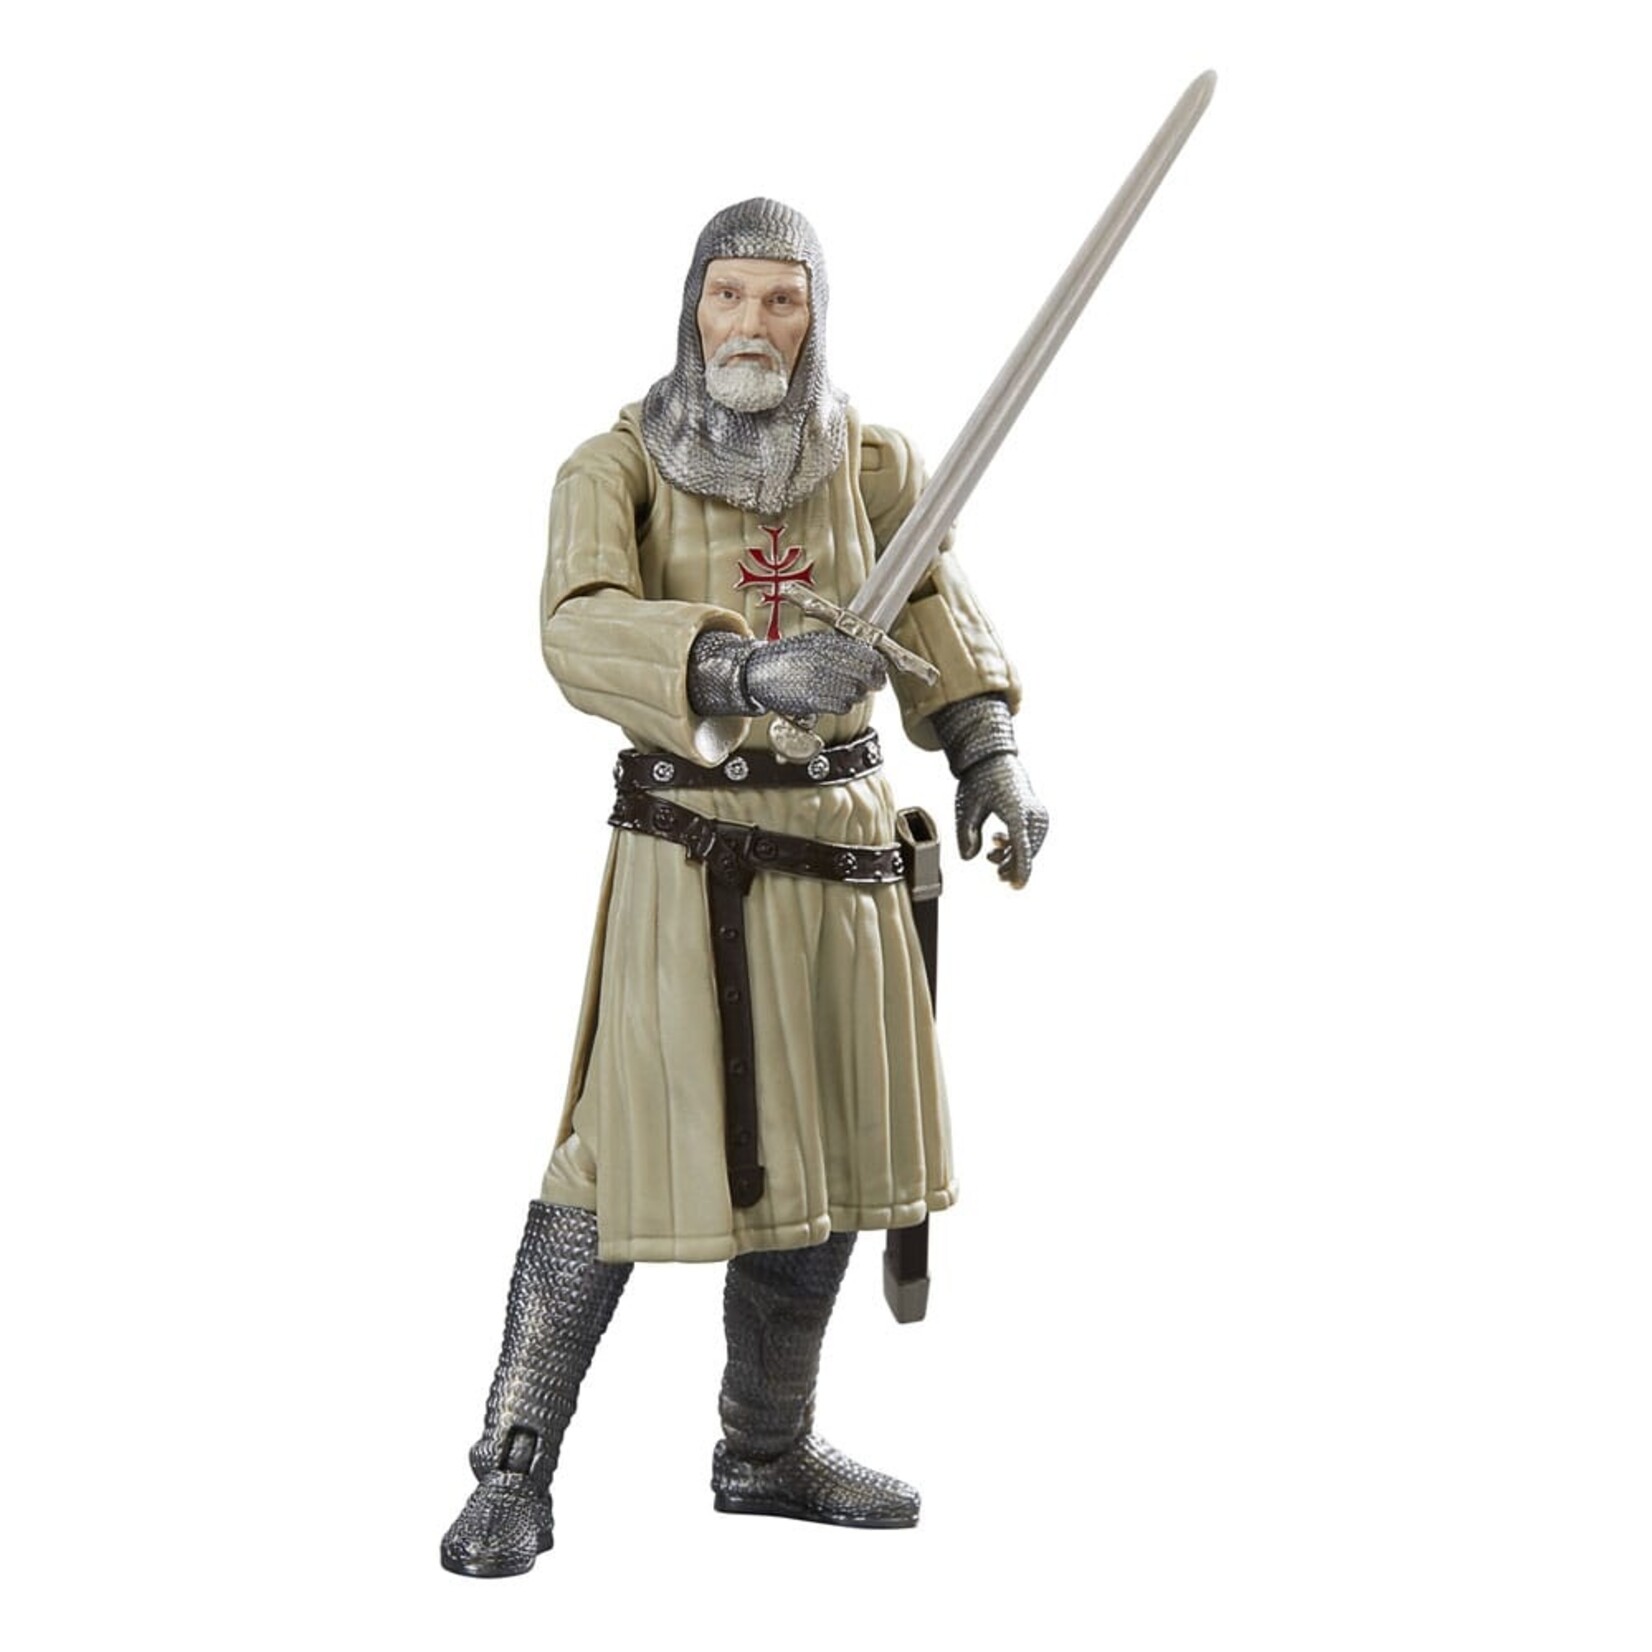 Hasbro Hasbro Indiana Jones and the Last Crusade Action Figure Grail Knight 15,9 cm